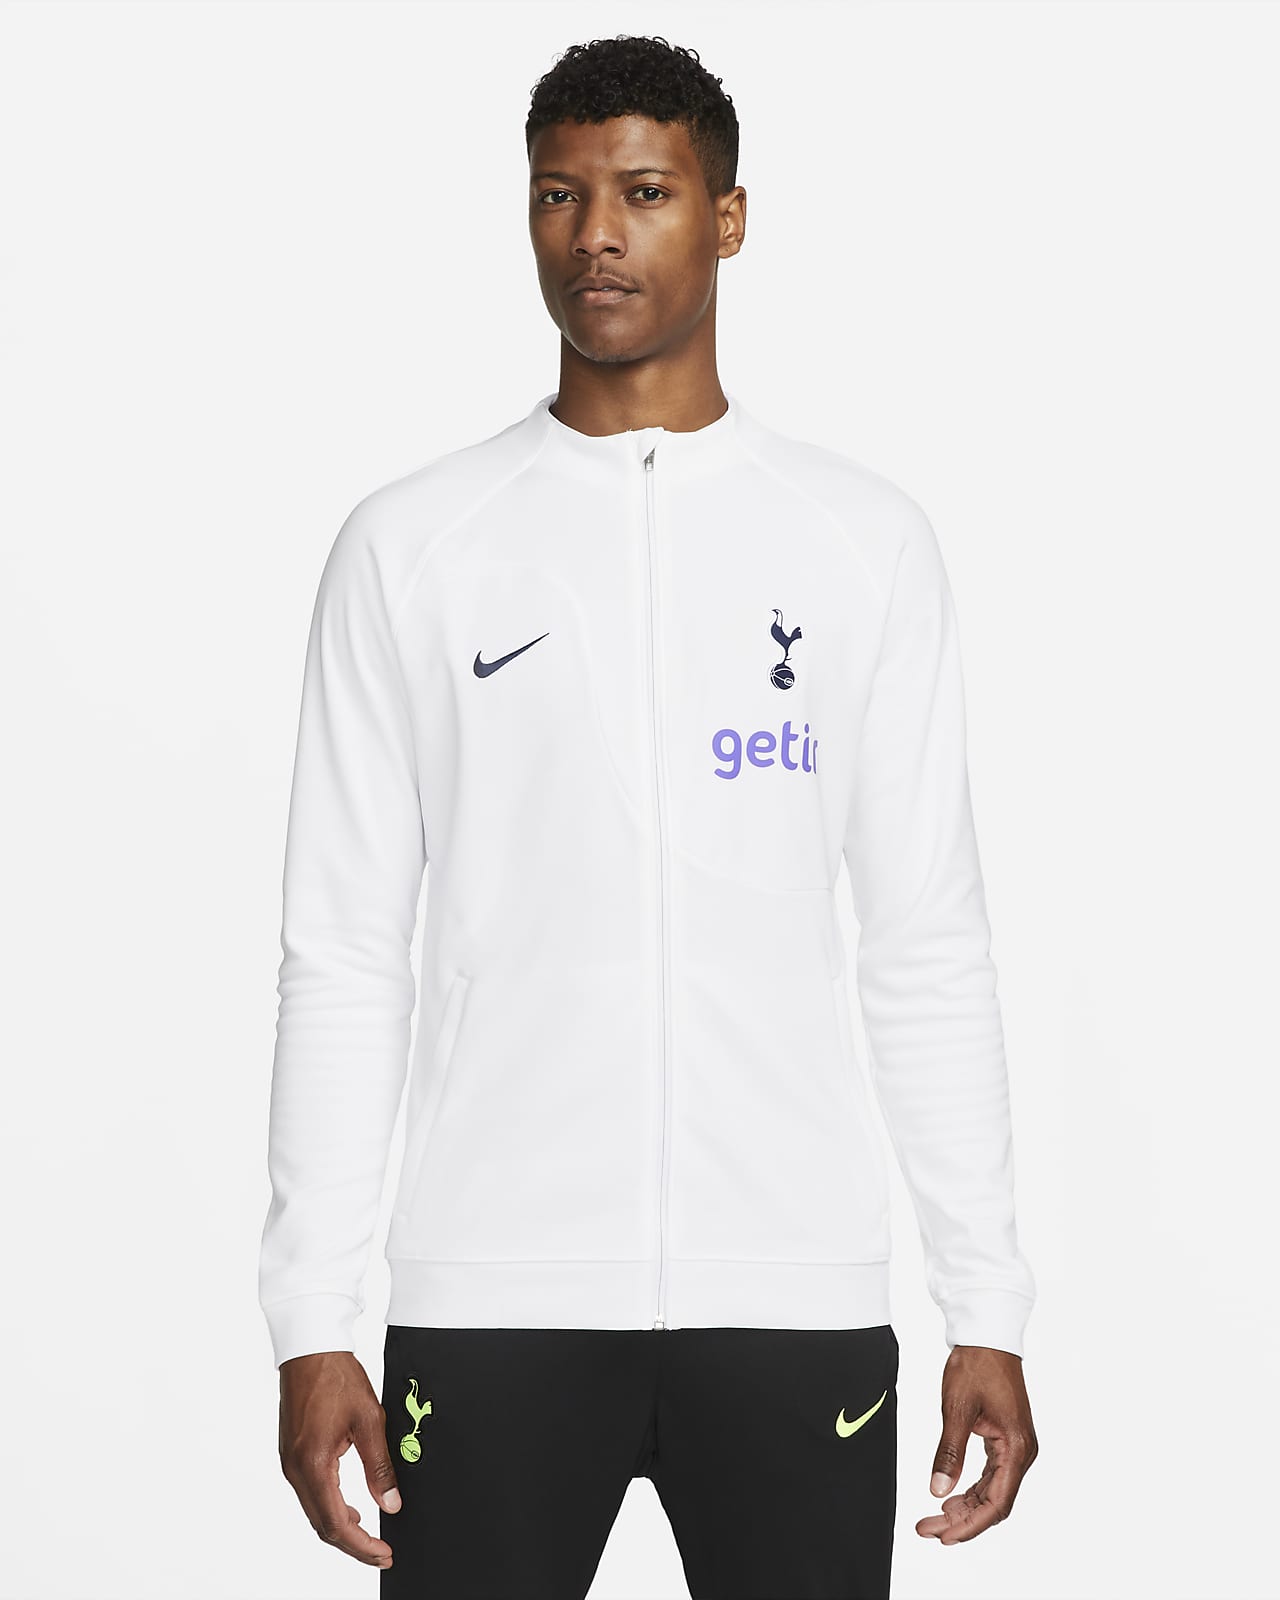 Hotspur Academy Pro Men's Nike Soccer Jacket.